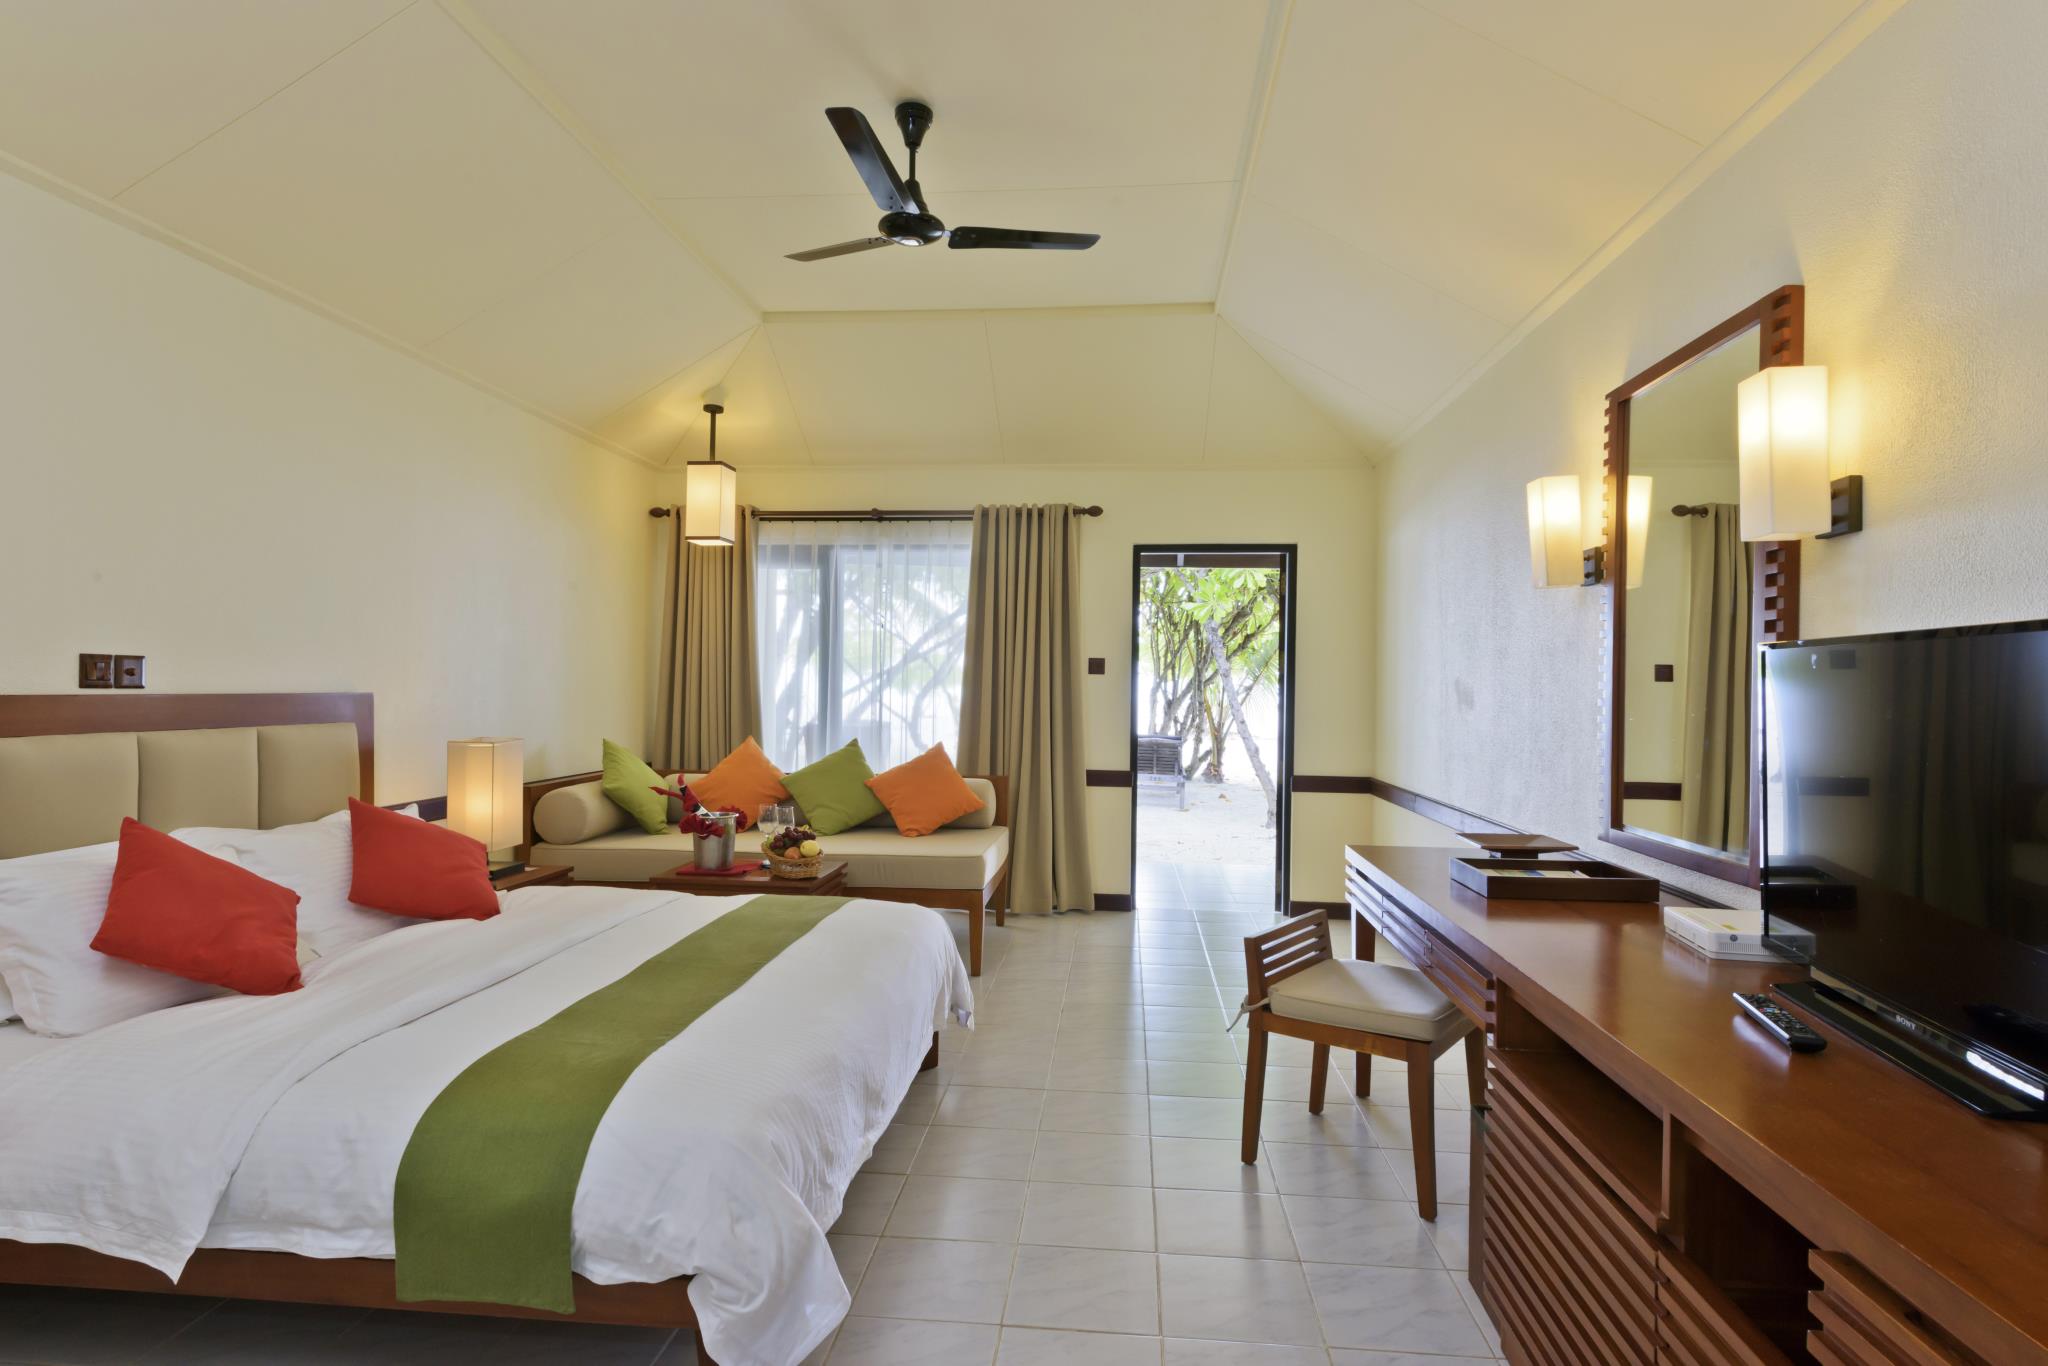 Enjoy Paradise Island Resort in Maldives